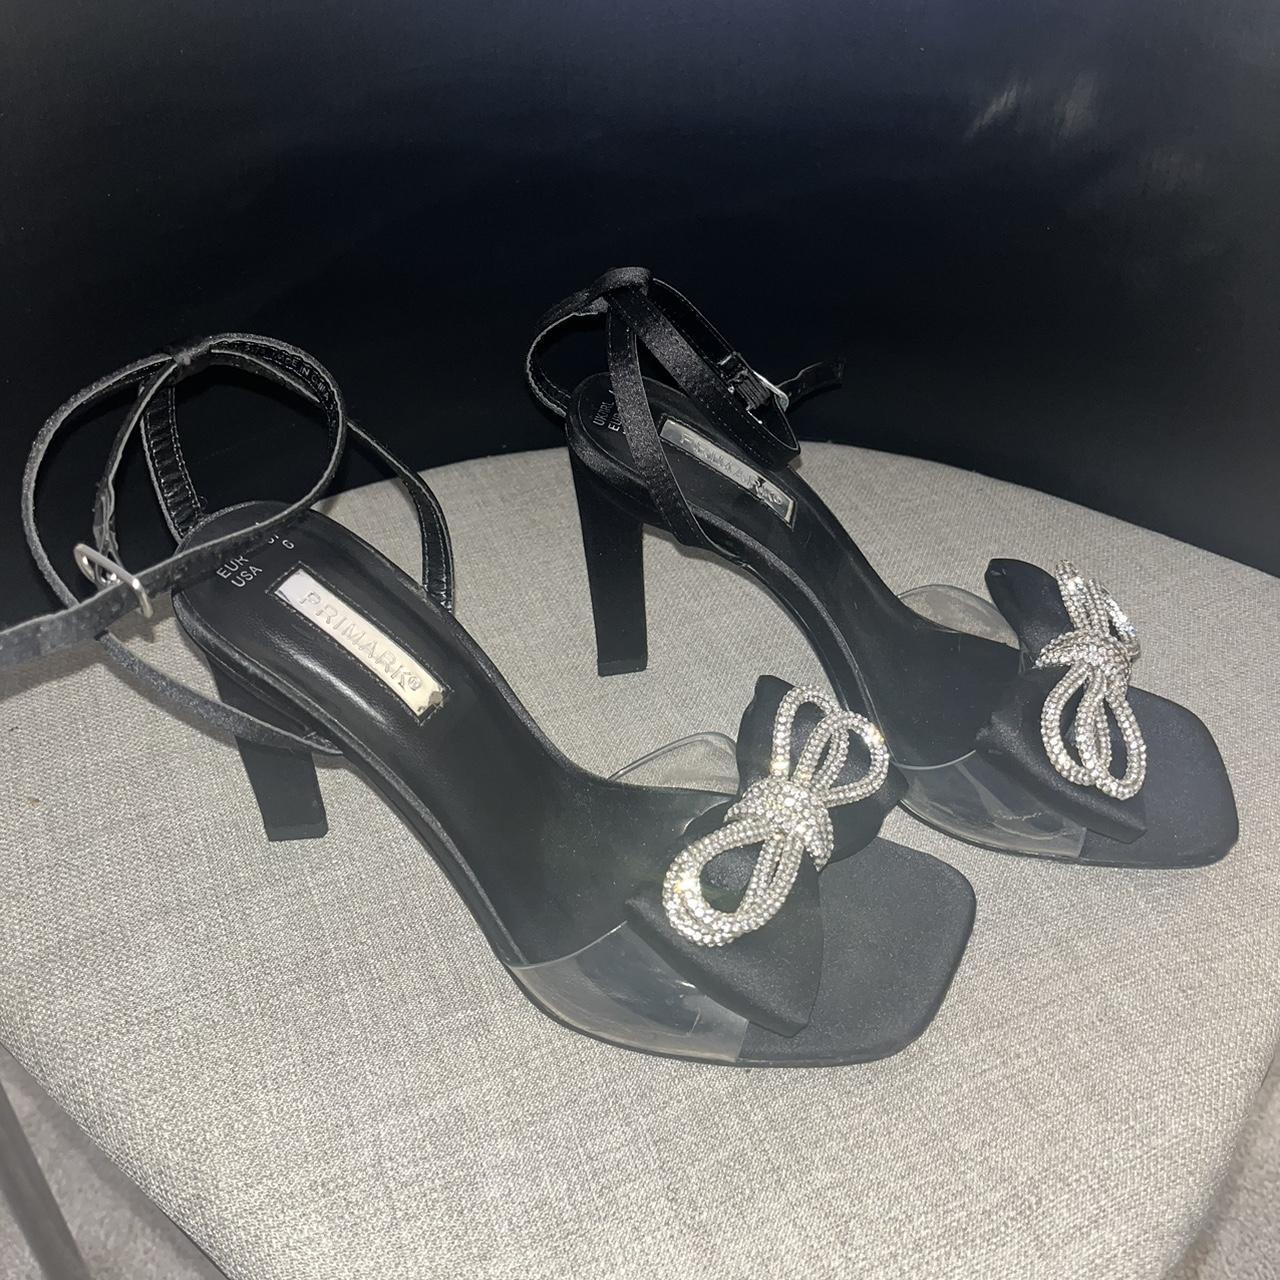 Primark black Strappy heel with bow detail Black... - Depop